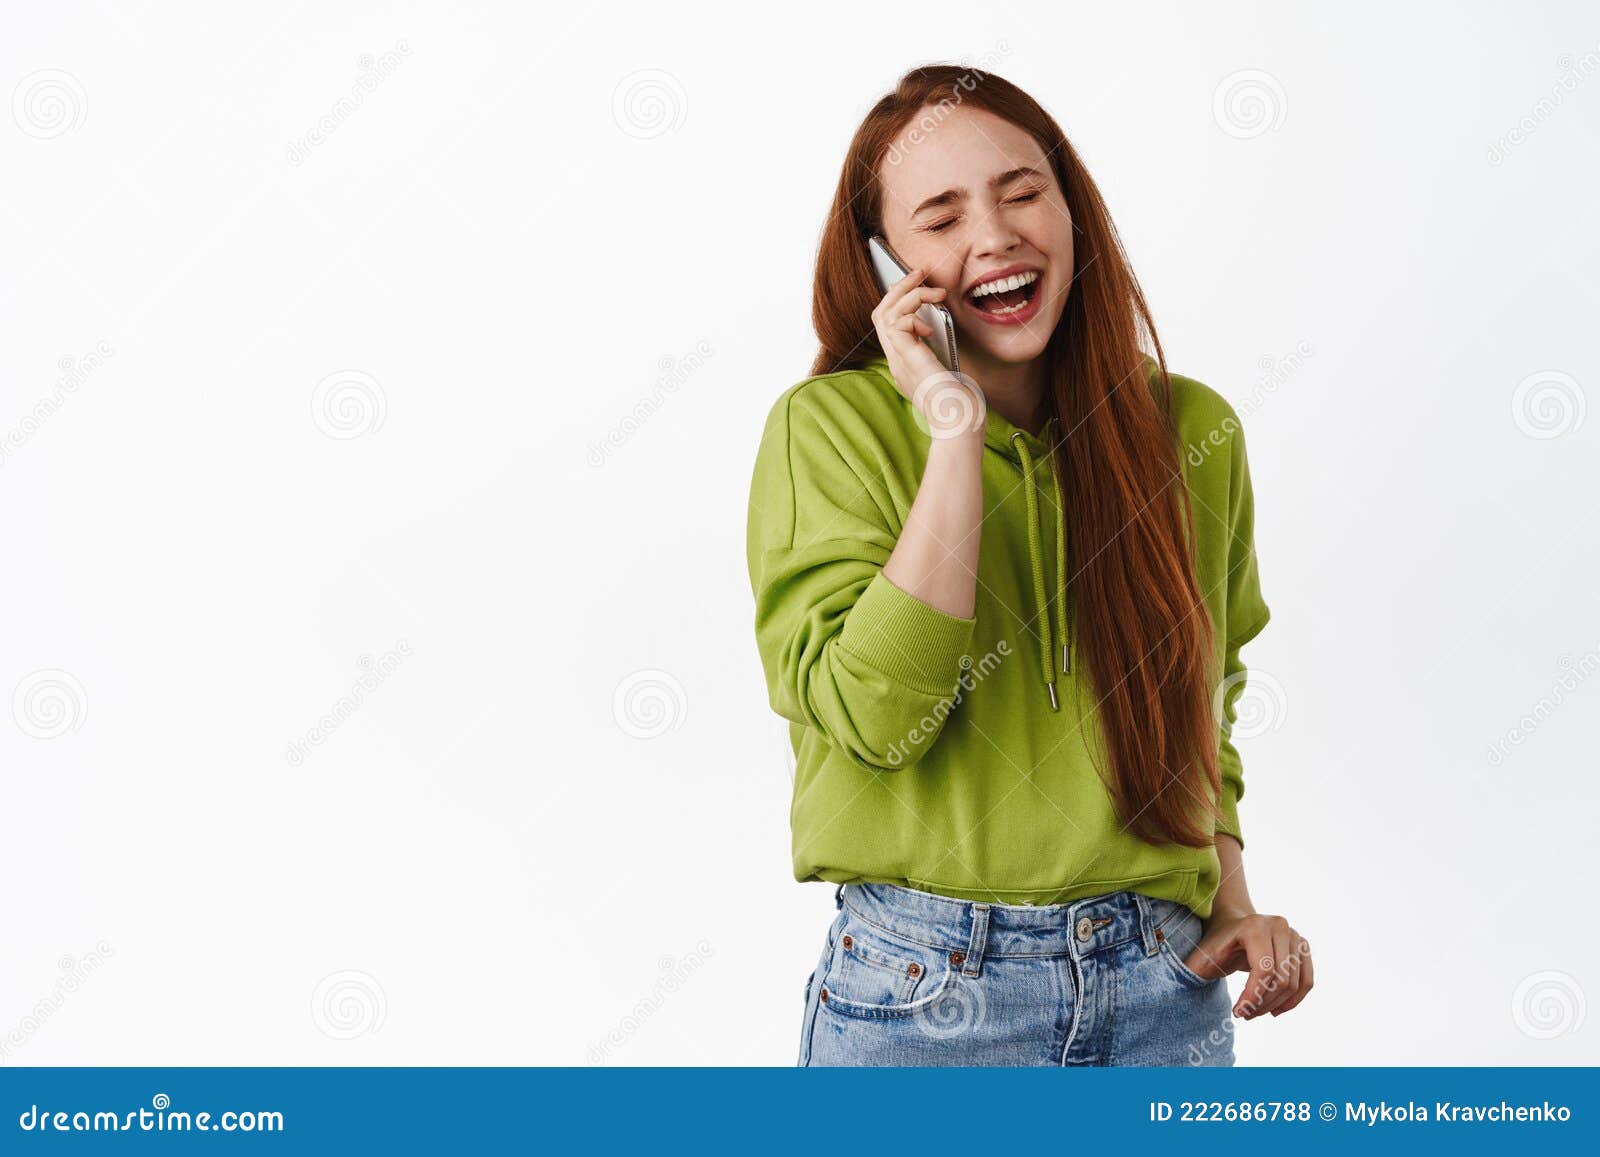 How to Overcome Phone Call Anxiety | by Ella Ann | ILLUMINATION | Medium